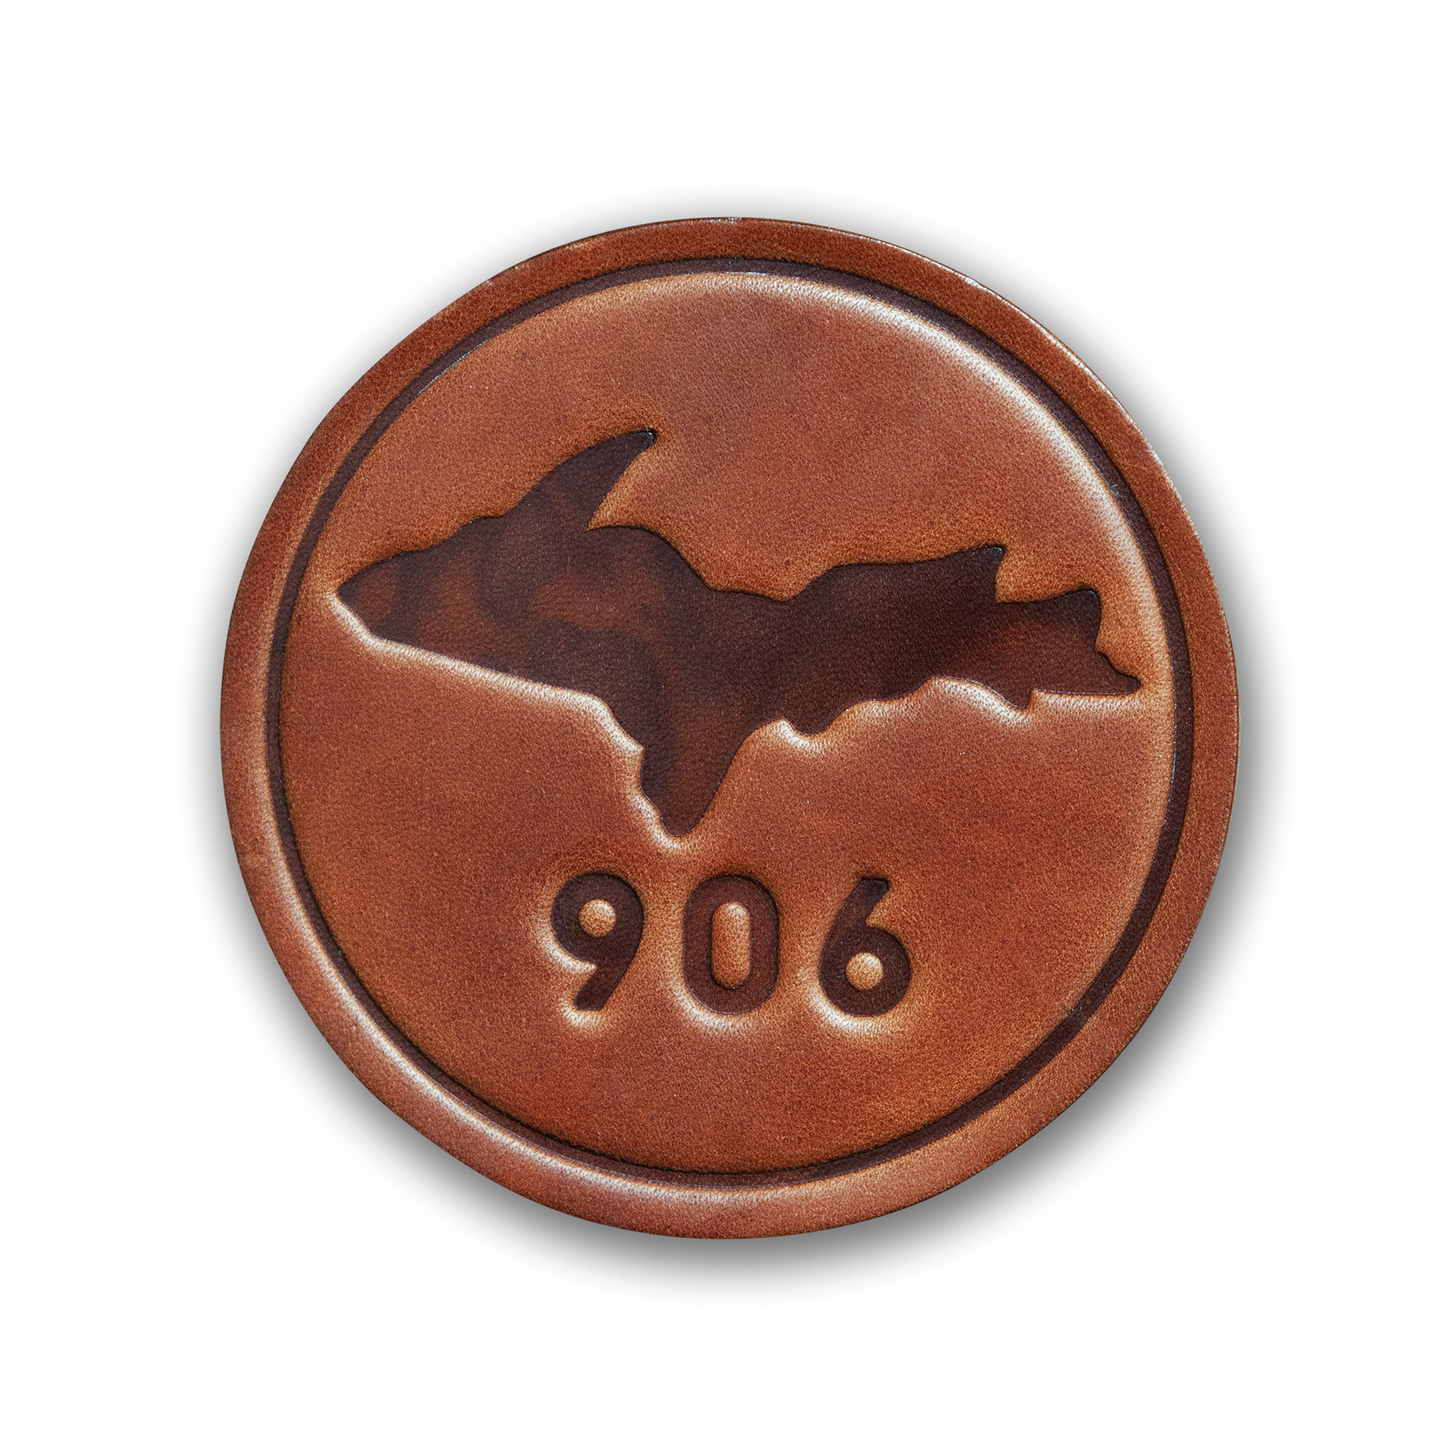 Upper Peninsula  Michigan 906 Leather Coaster